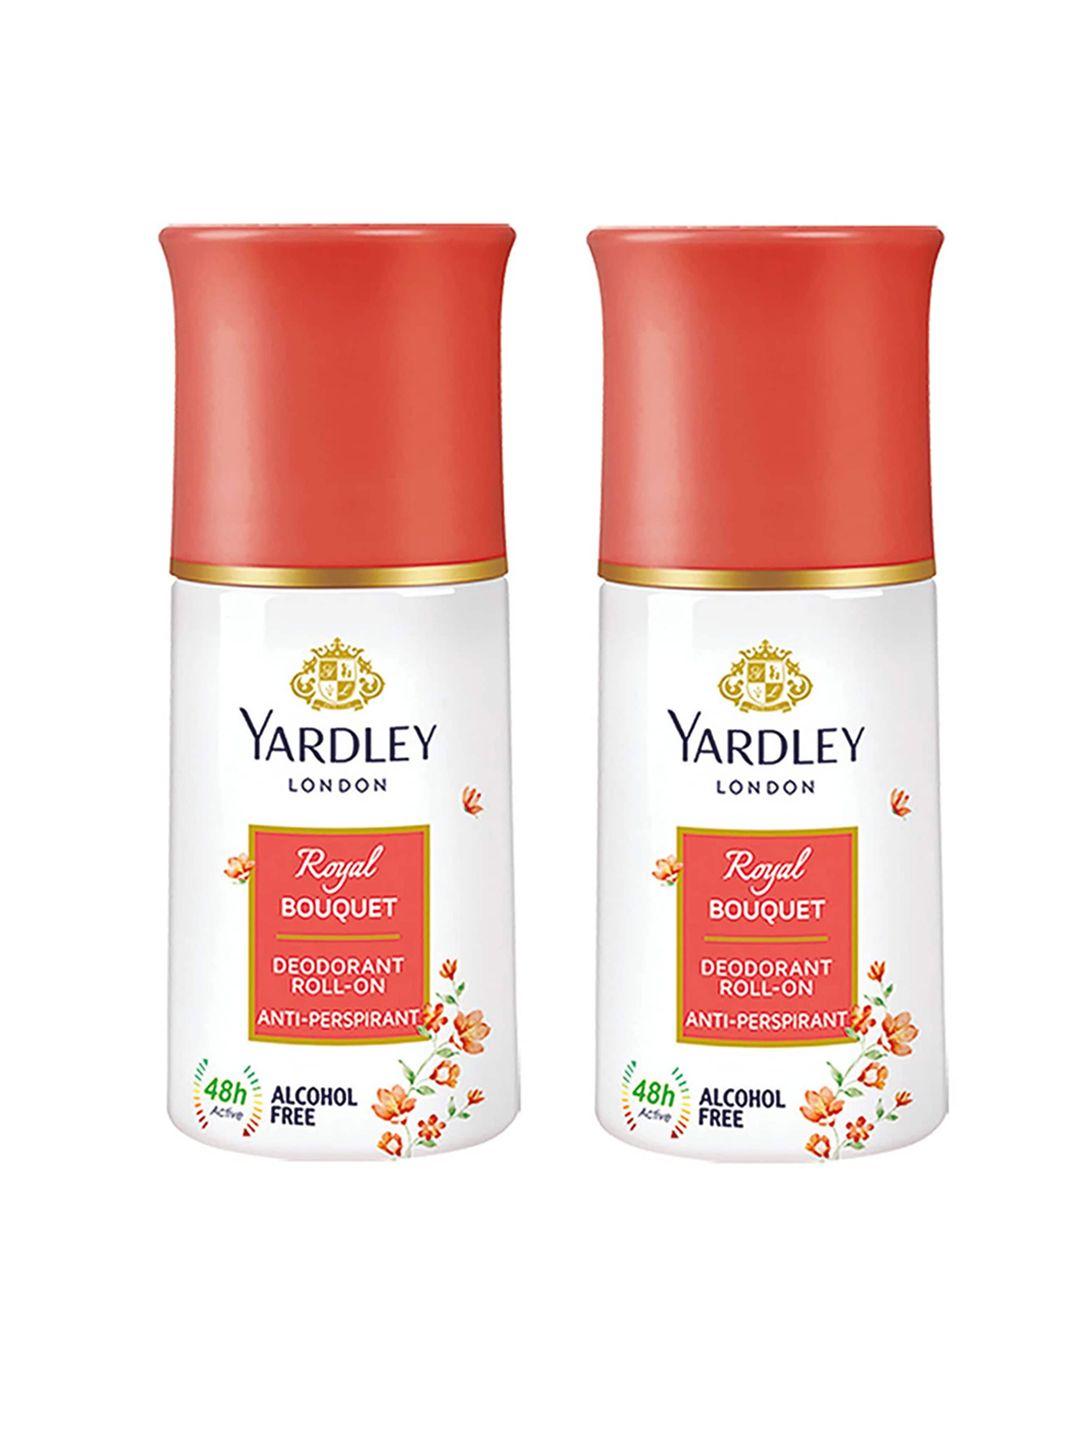 yardley london women set of 2 anti-perspirant royal bouquet deodorant roll-on - 50ml each